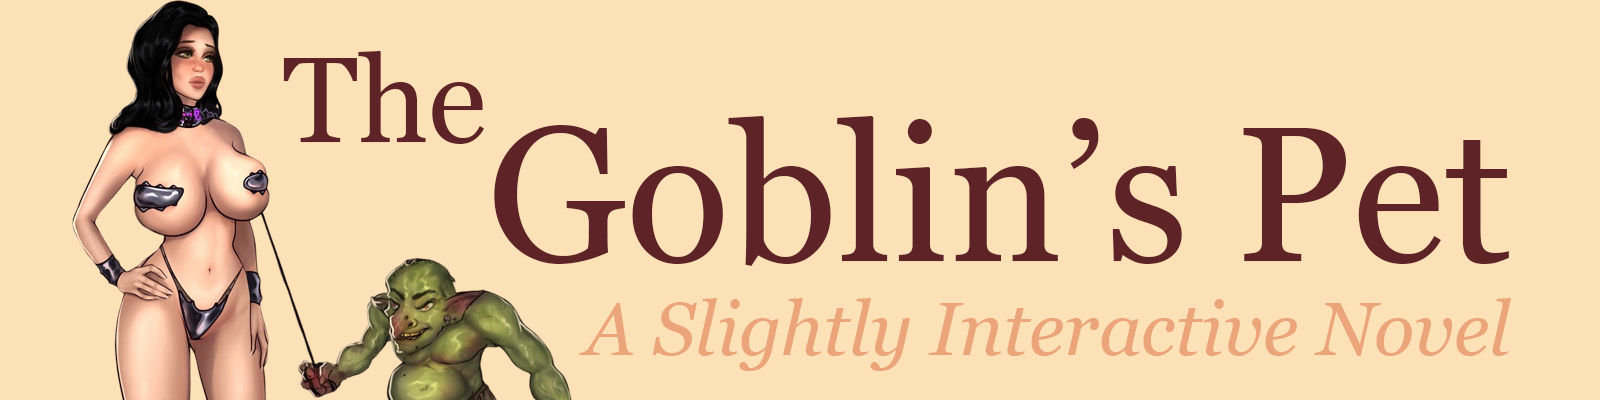 The Goblin's Pet poster